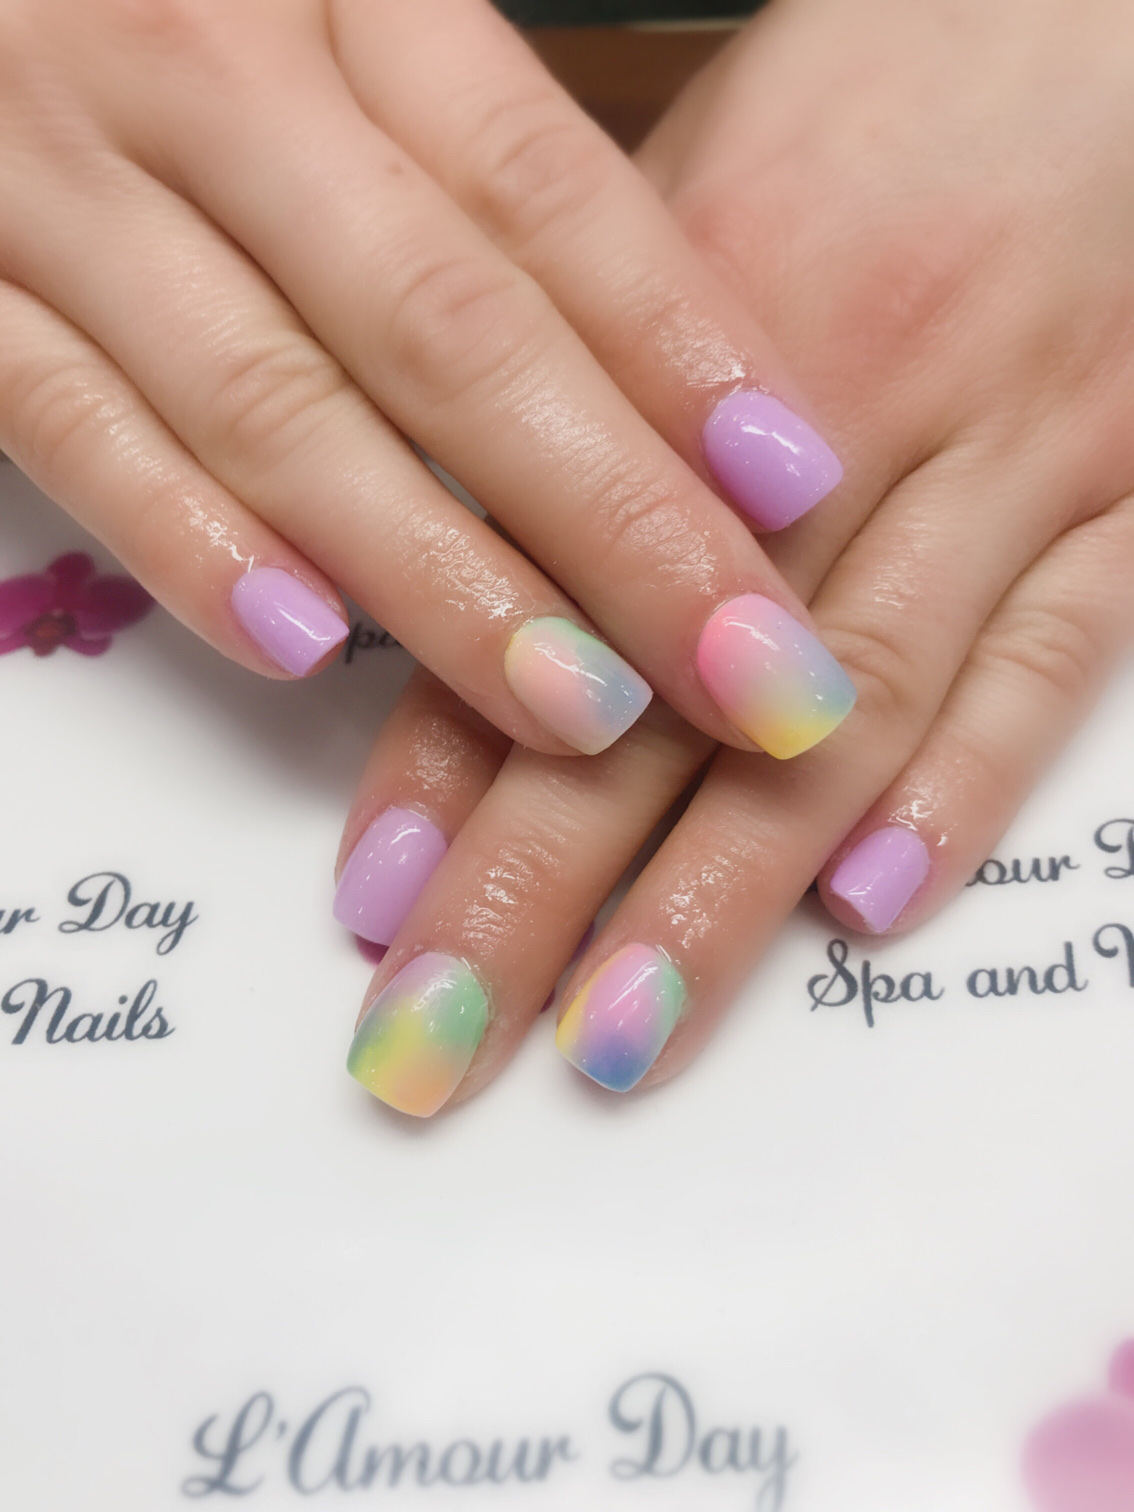 Blue manicure with glitter | Posh nails, Best nail salon, Spring pedicure